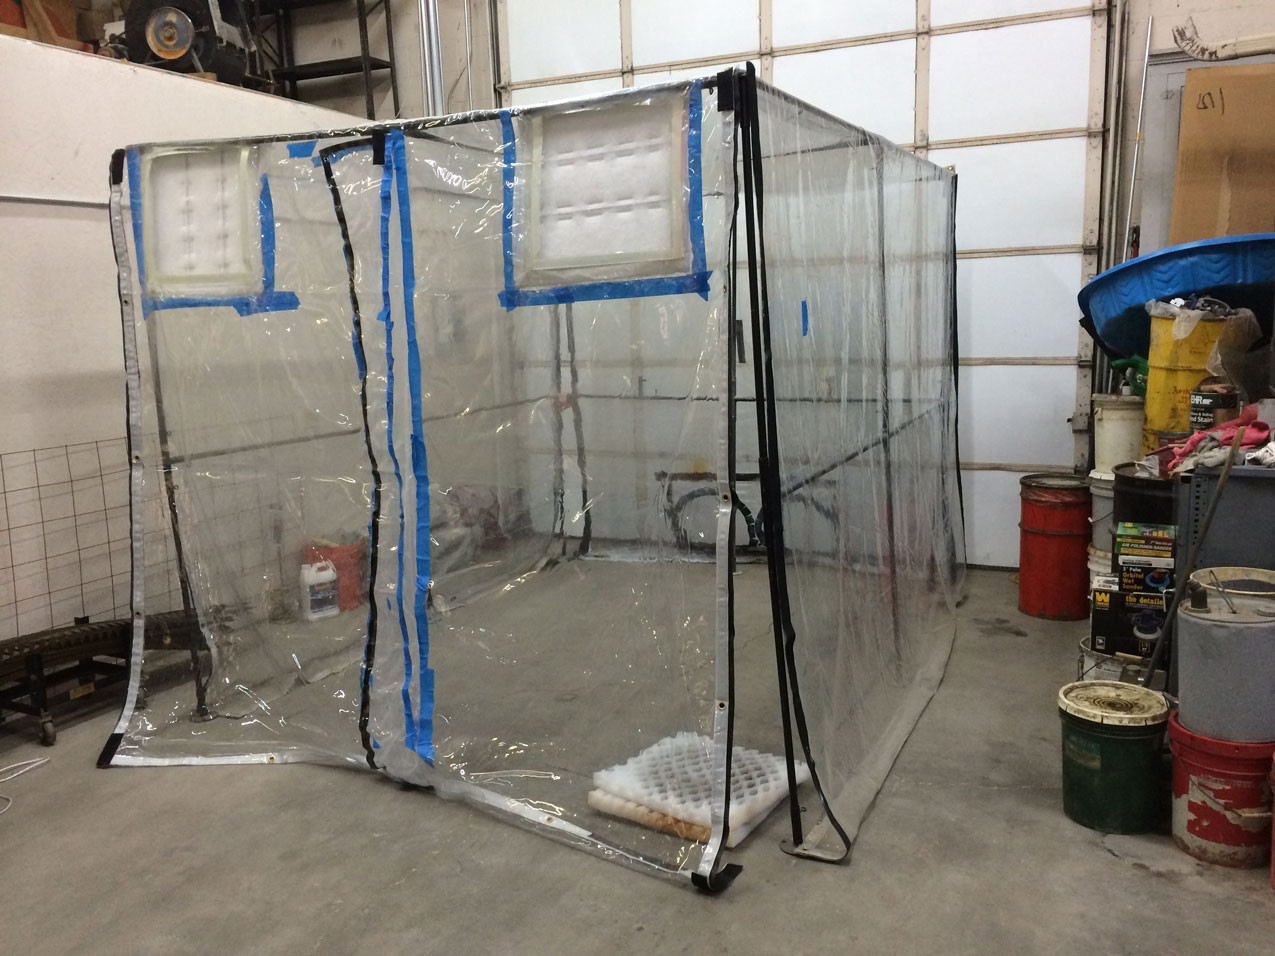 DIY Spray Booth Plans
 The Homemade Spray Booth – Friend or Foe